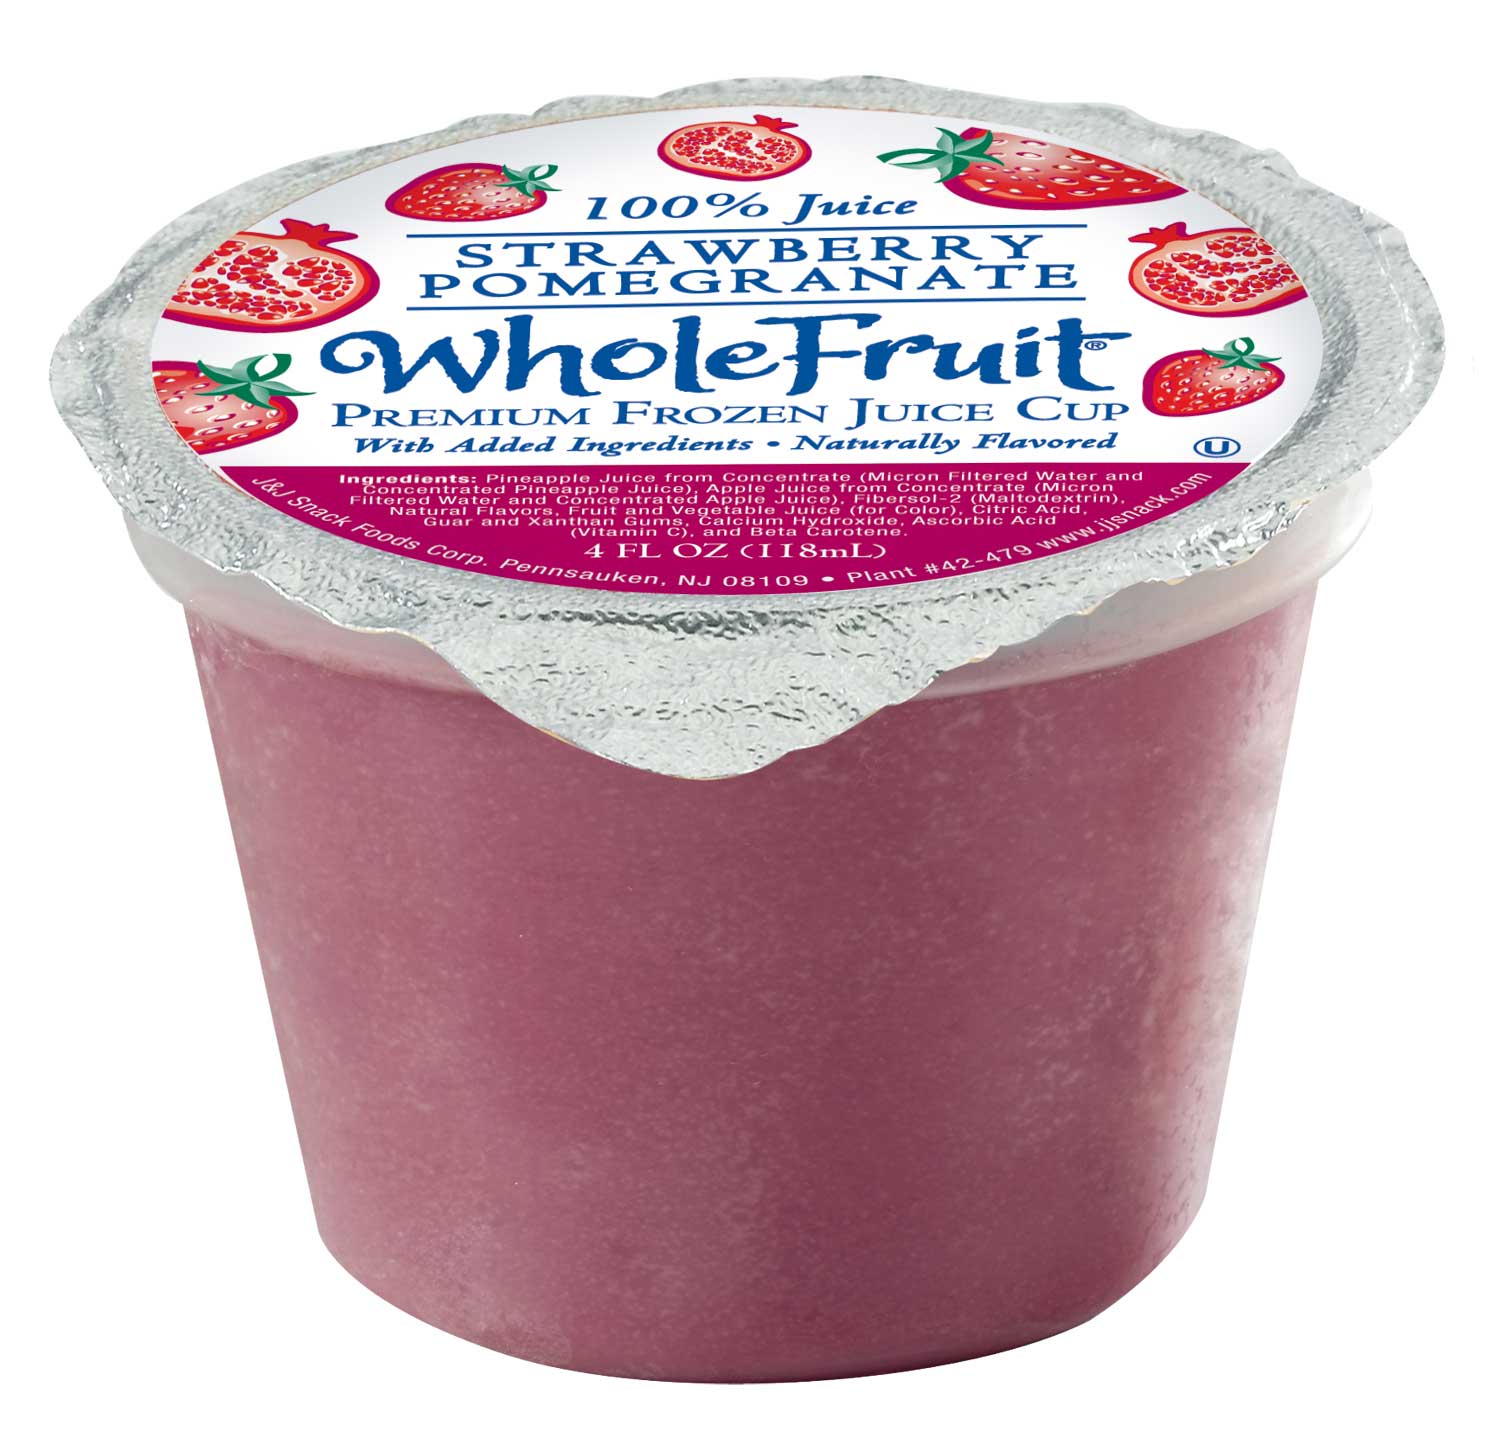 Whole Fruit Strawberry Pomegranate Premium Juice Cup, 4 Ounce -- 96 per case.